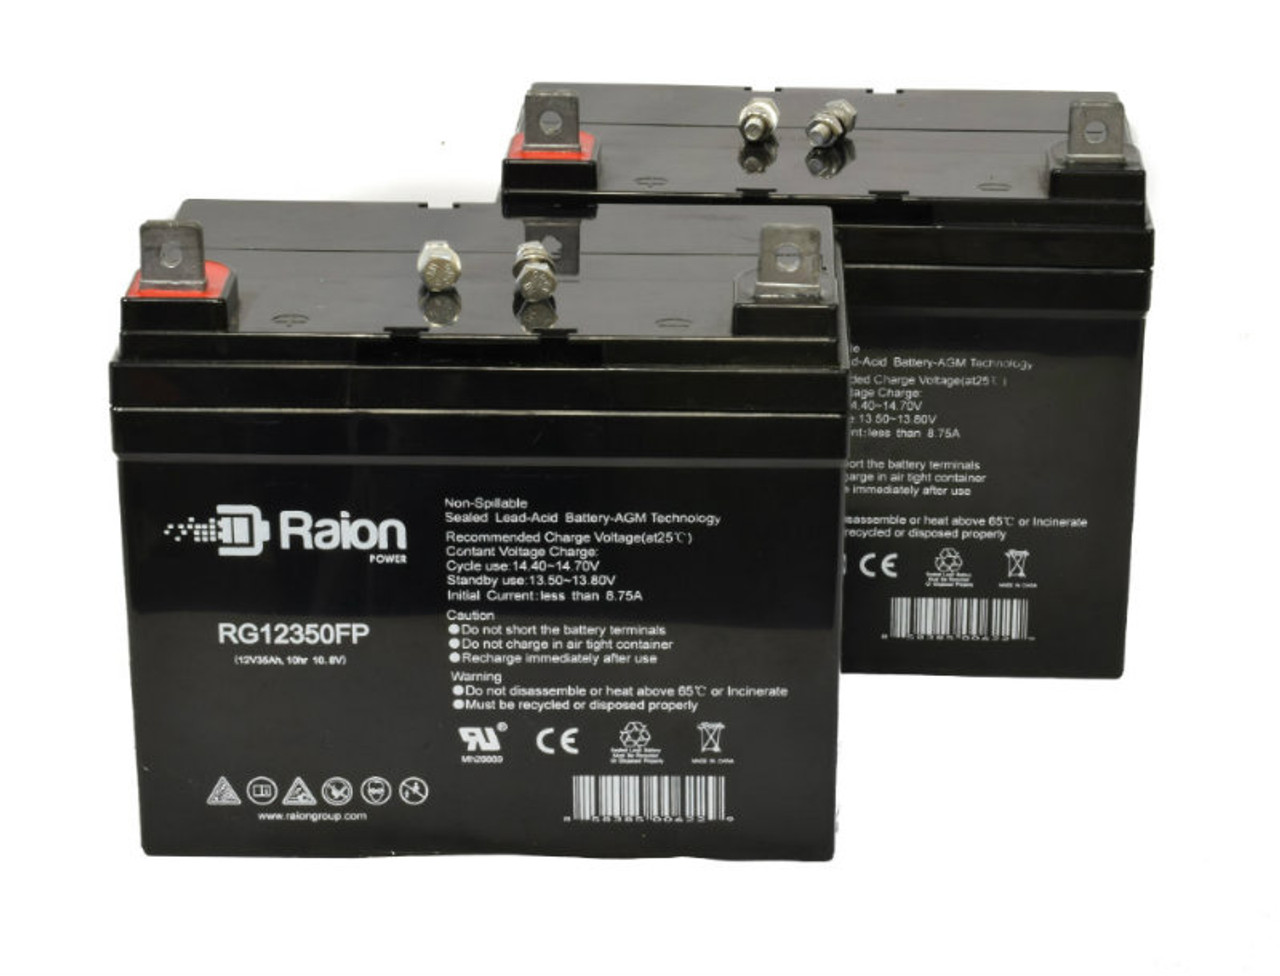 Raion Power Replacement 12V 35Ah Lawn Mower Battery for Kubota B4200 - 2 Pack